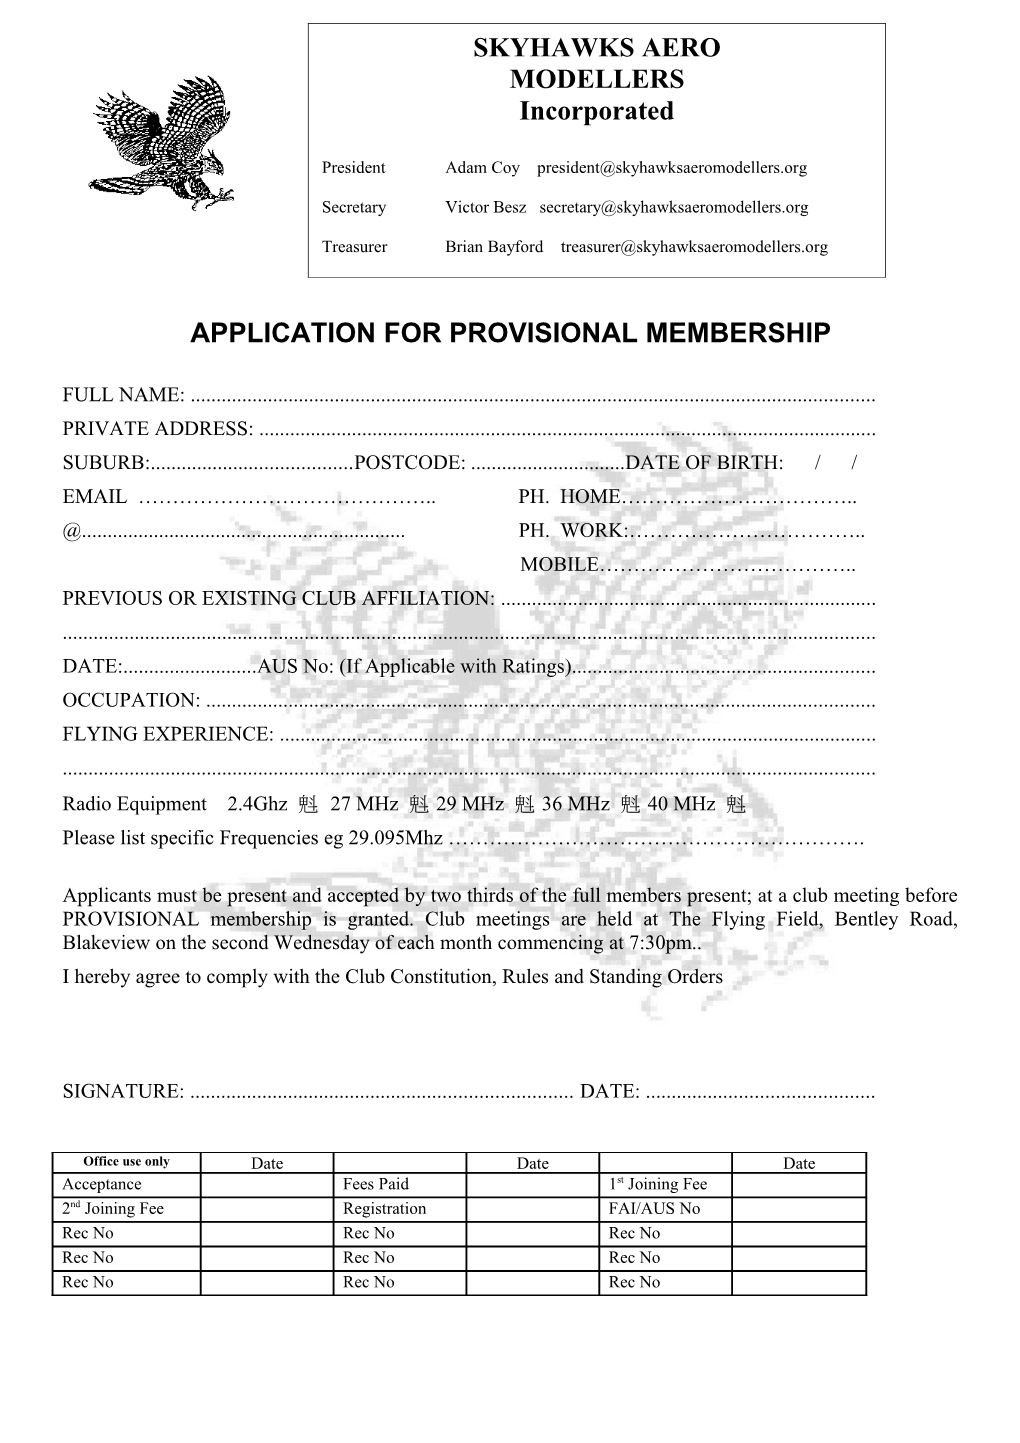 Application for Provisional Membership